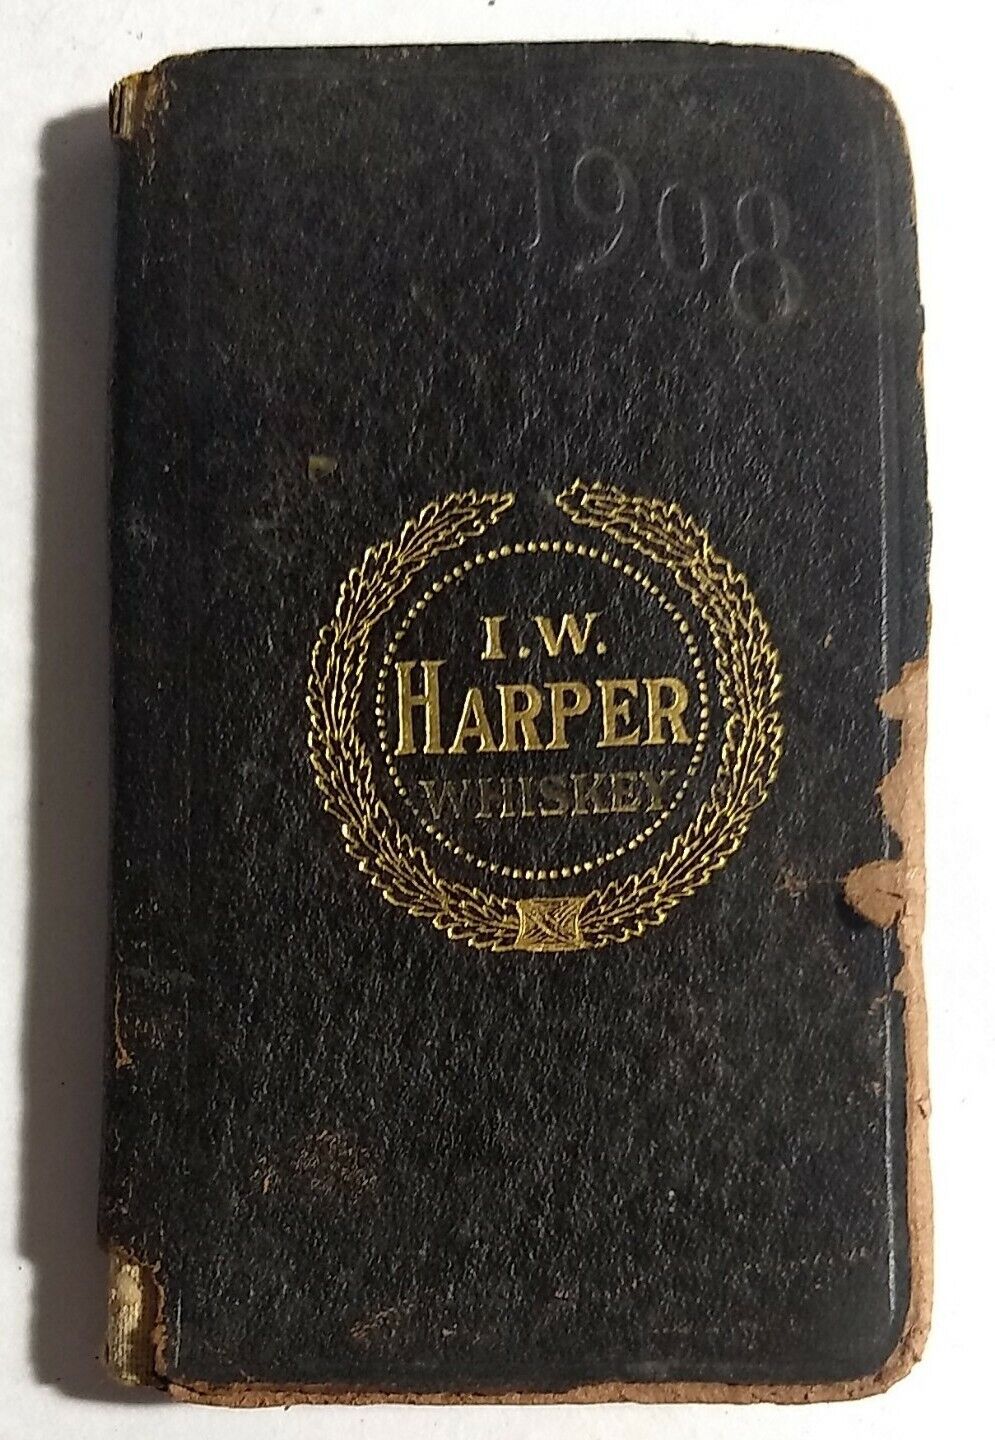 1908 I.W. Harper Whiskey Advertising Calender Junior Diary Book Rare Rough Cover